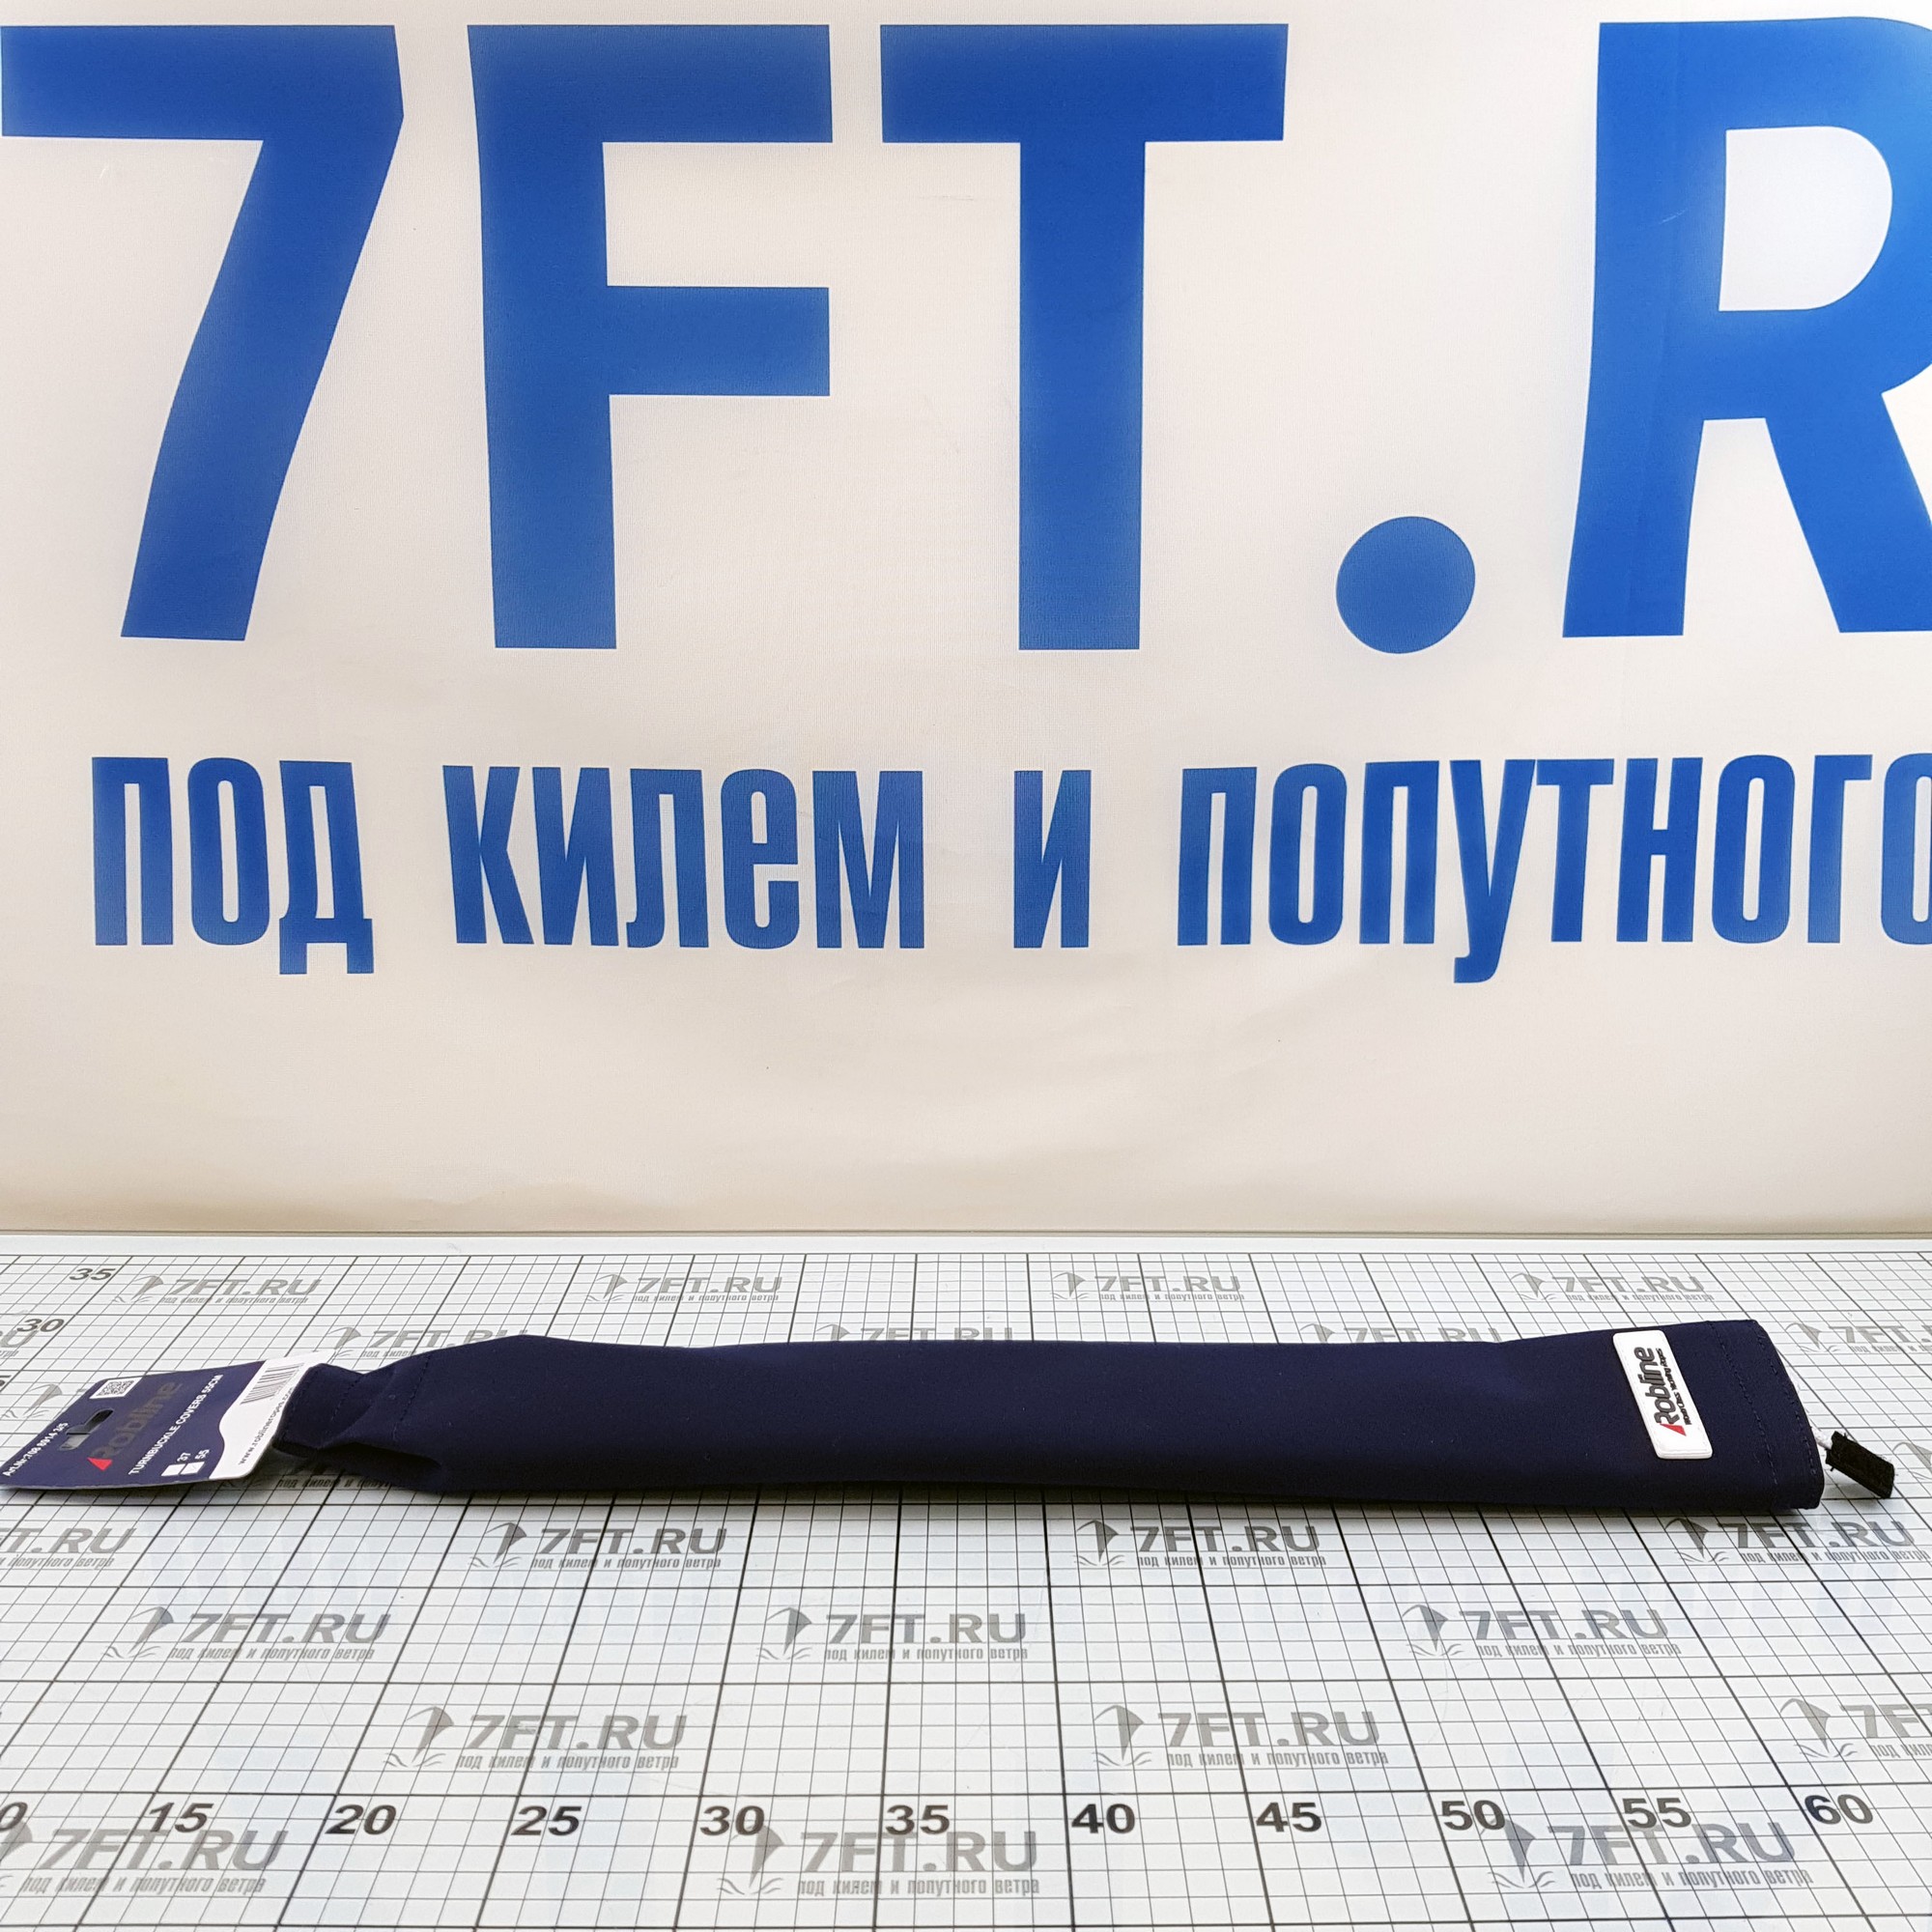 Купить Чехол на талреп Robship Premium TBCVR1-LG-NY 520 x 60 x 60 мм темно-синий 7ft.ru в интернет магазине Семь Футов